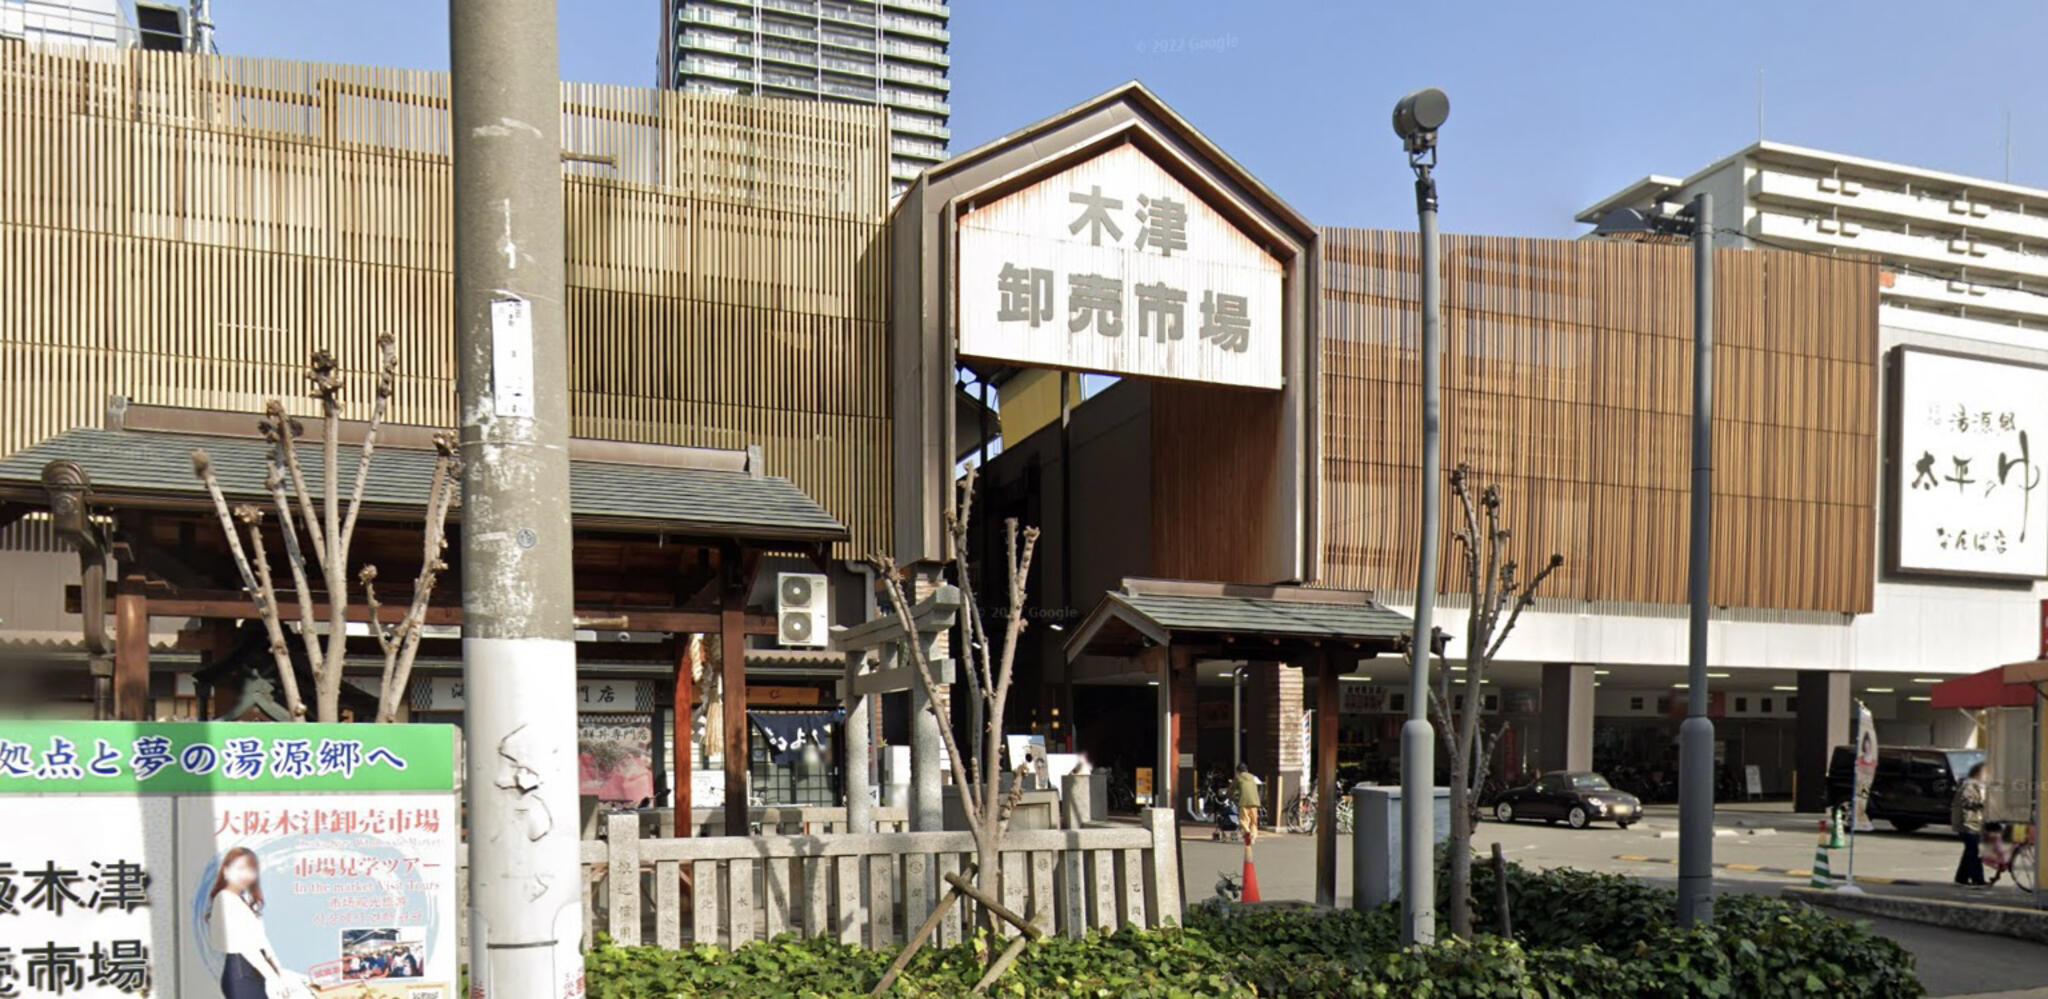 ODA 木津市場(なんば)店の代表写真1